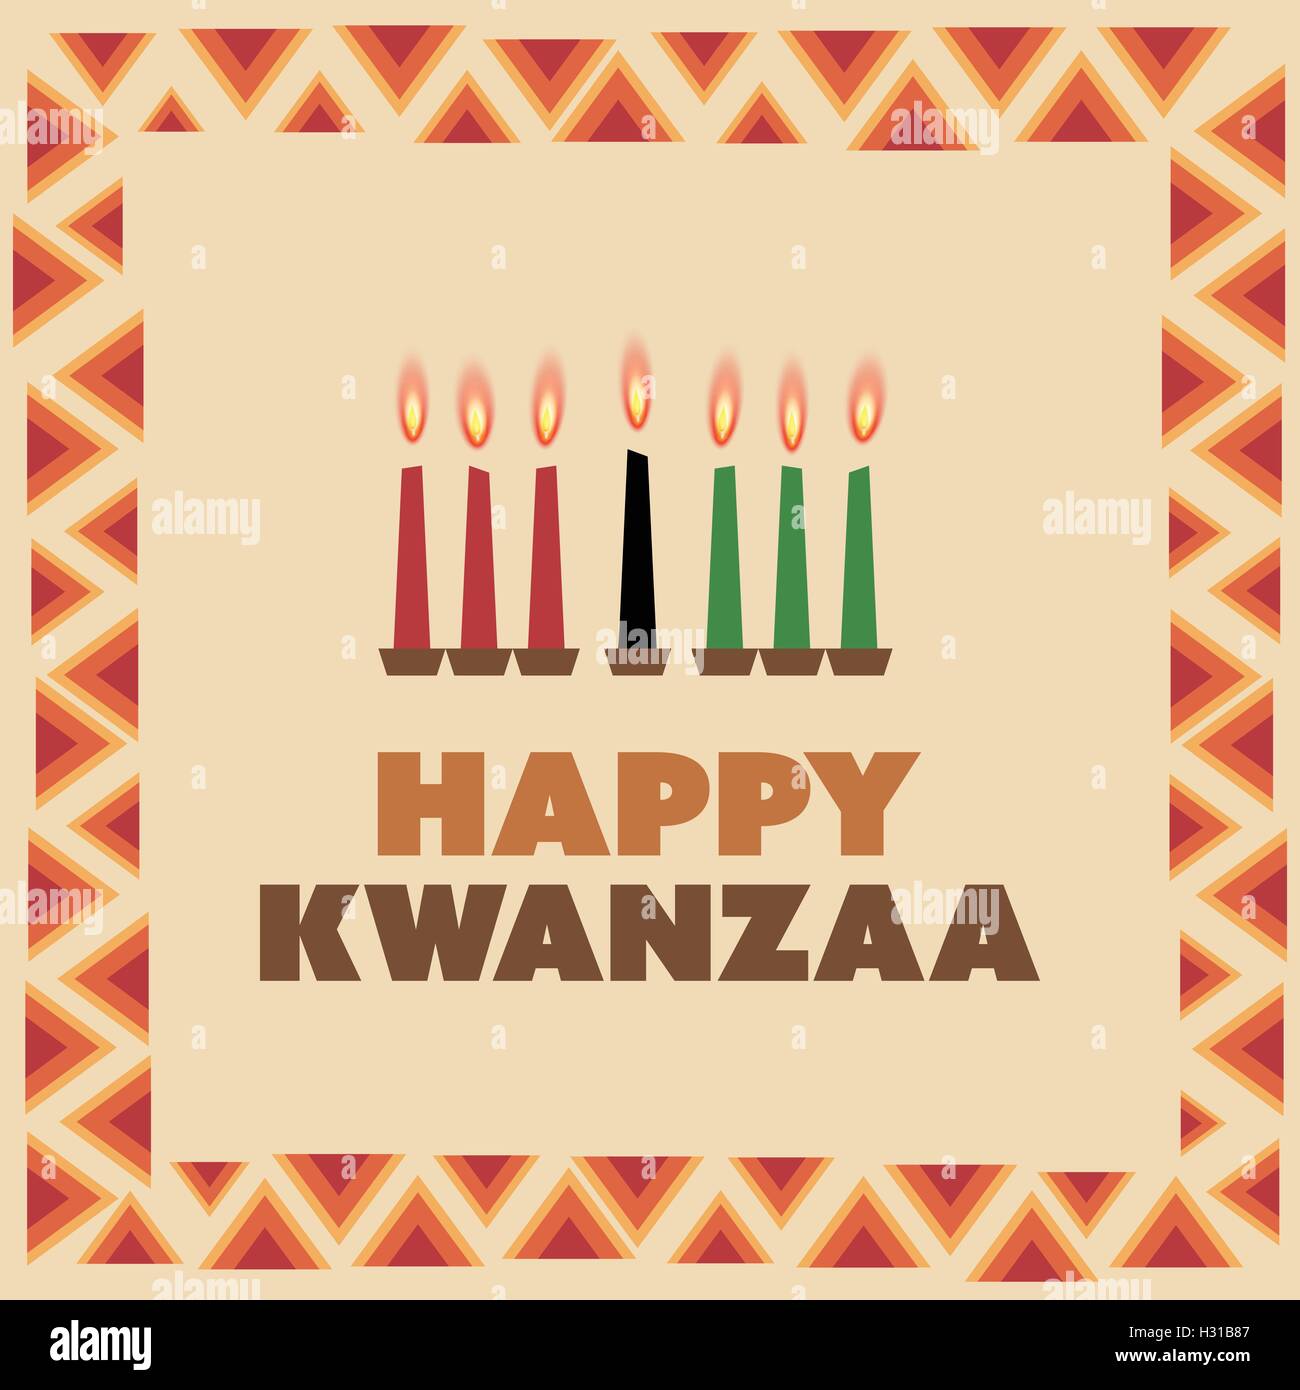 Happy Kwanzaa Greeting Card Design Template Stock Vector